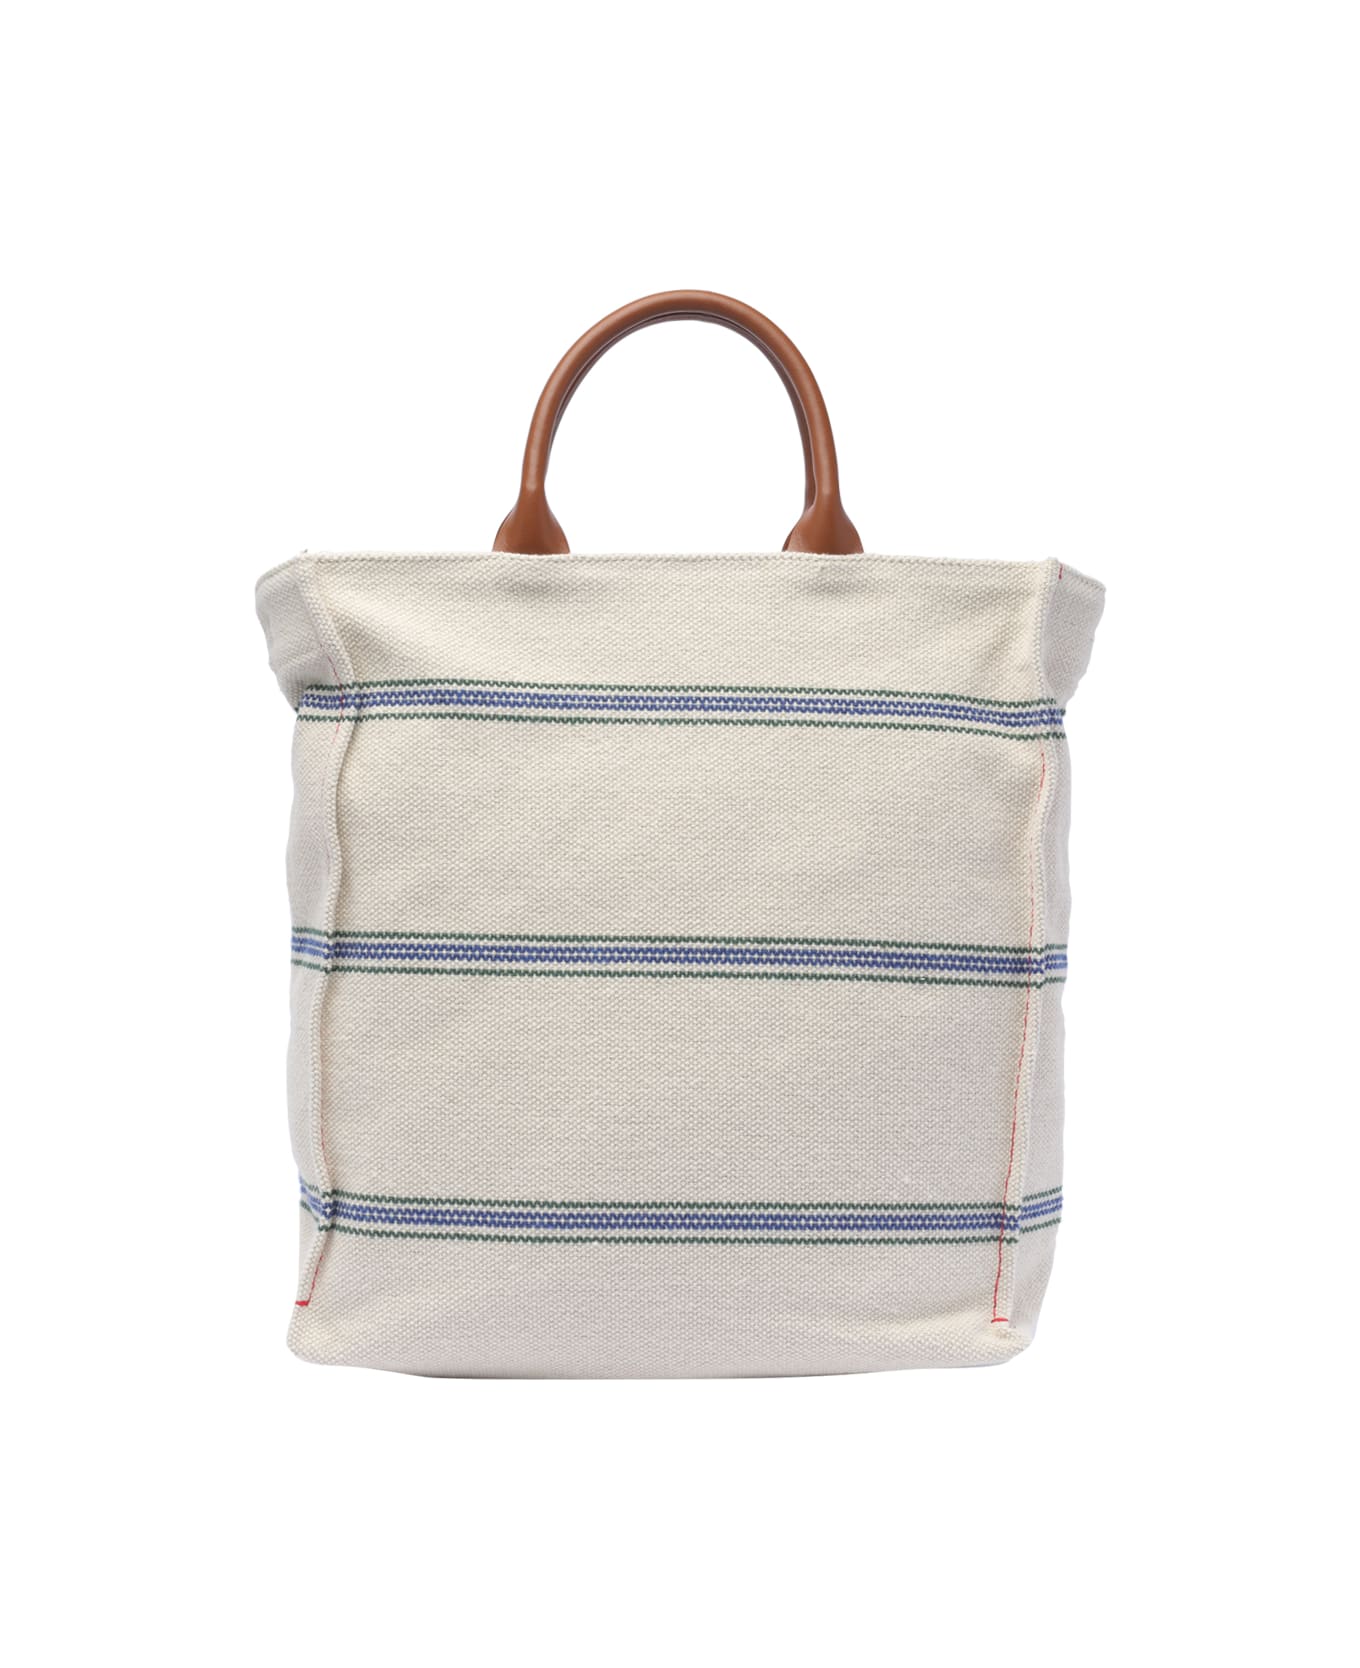 Marni Logo Shopping Bag - Beige/blu